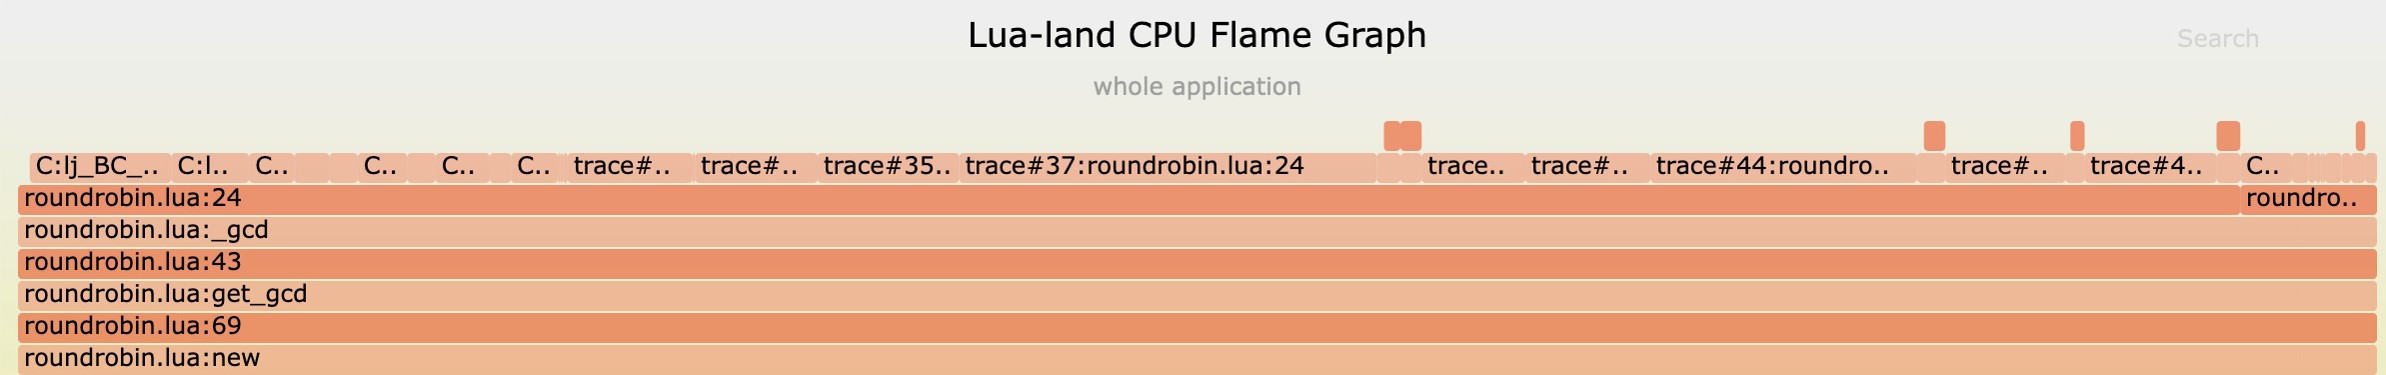 Lua-Land CPU Flame Graph for Bilibili